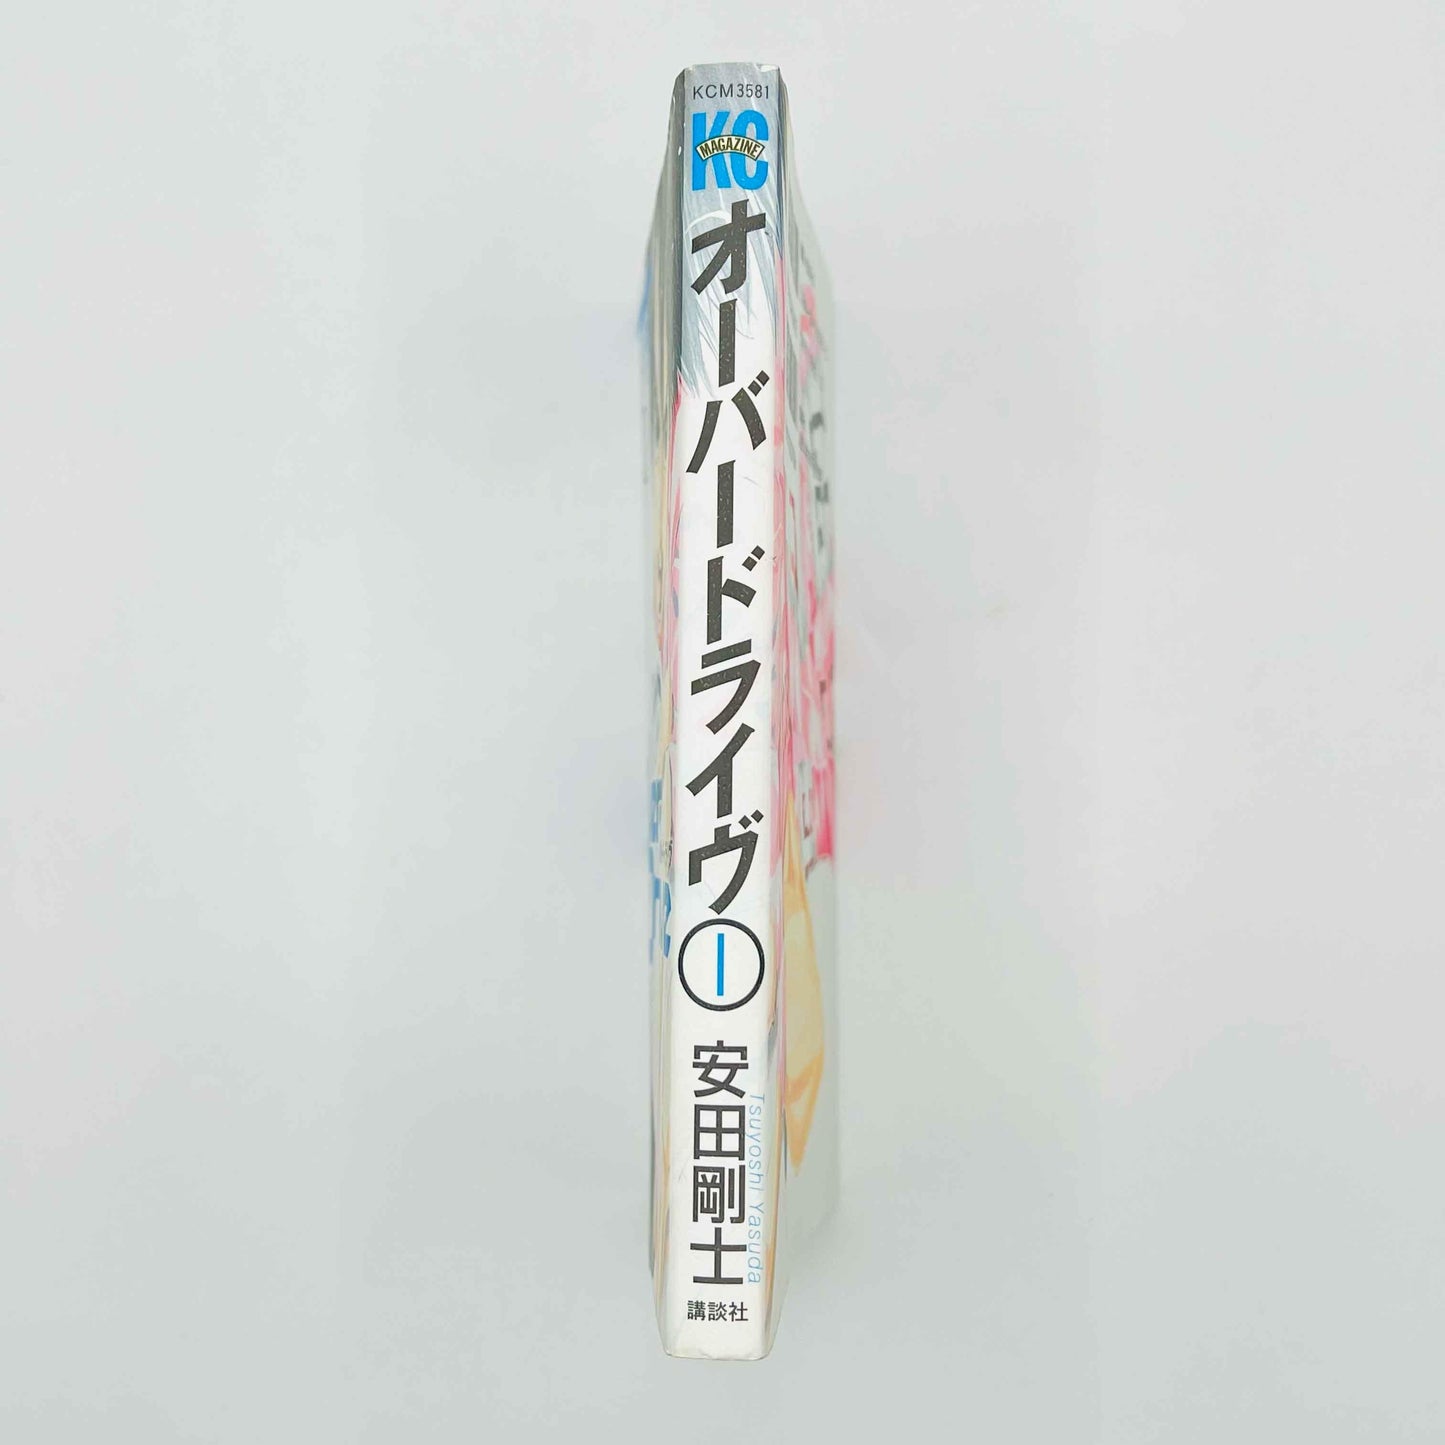 Over Drive - Volume 01 - 1stPrint.net - 1st First Print Edition Manga Store - M-OVERDRIVE-01-001